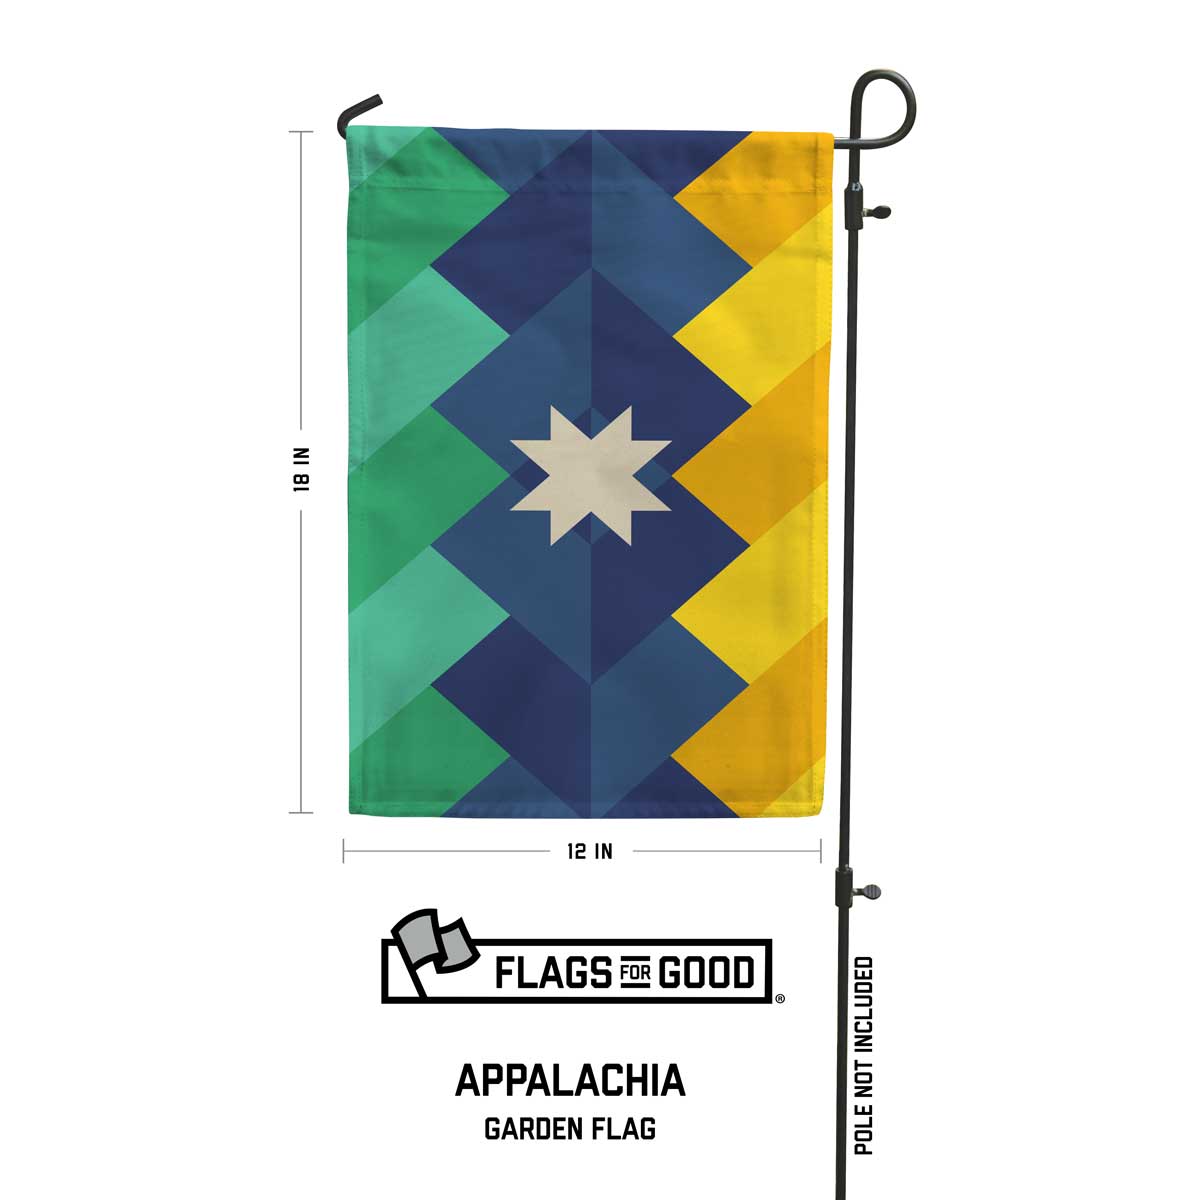 appalachia garden flag 18in by 12in measurements